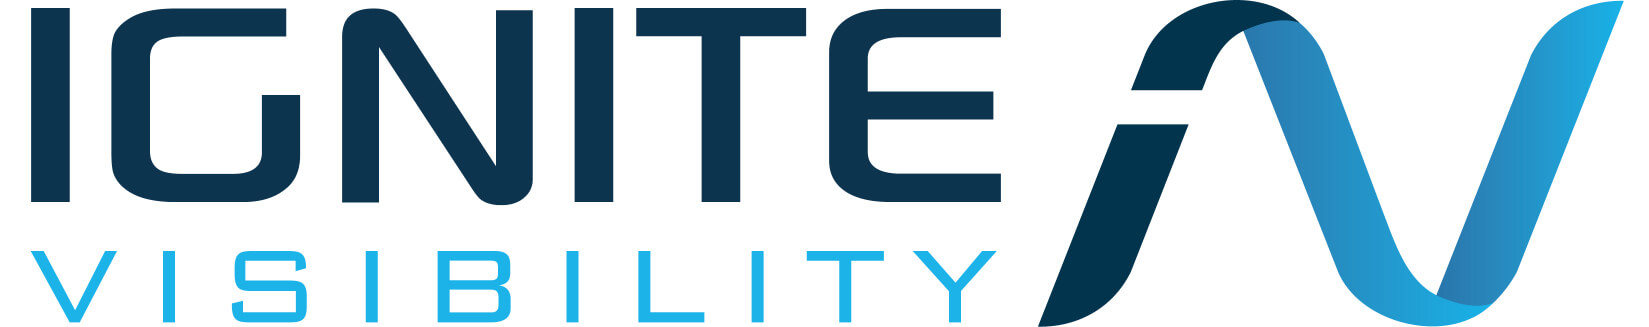 Top Global SEO Company Logo: Ignite Visibility